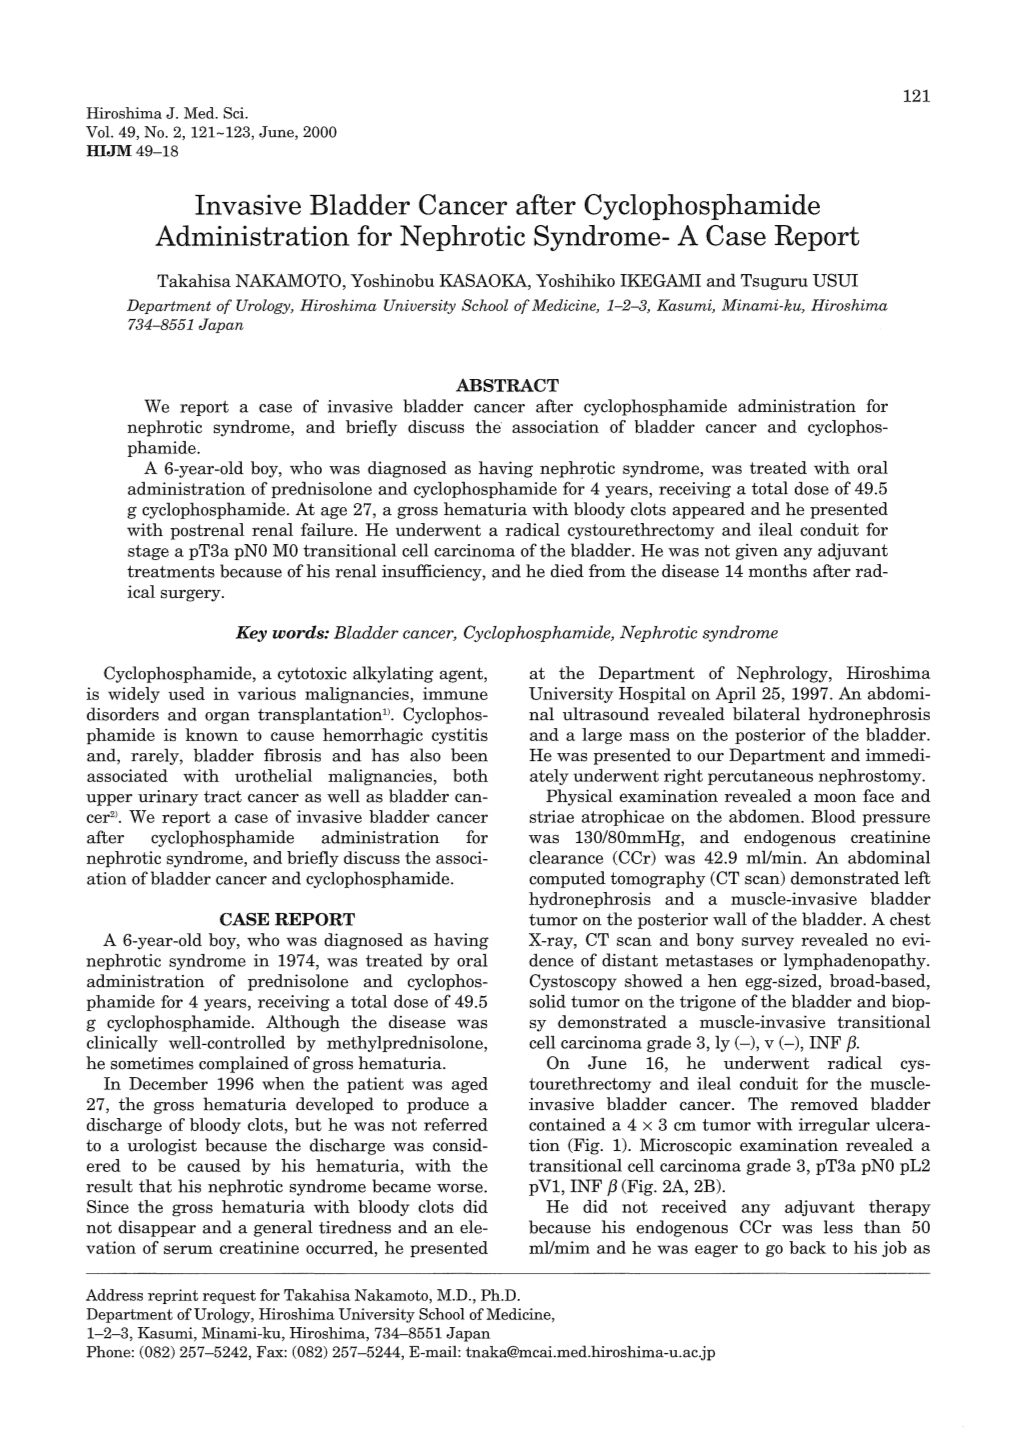 Invasive Bladder Cancer After Cyclophosphamide Administration for N Ephrotic Syndrome- a Case Report